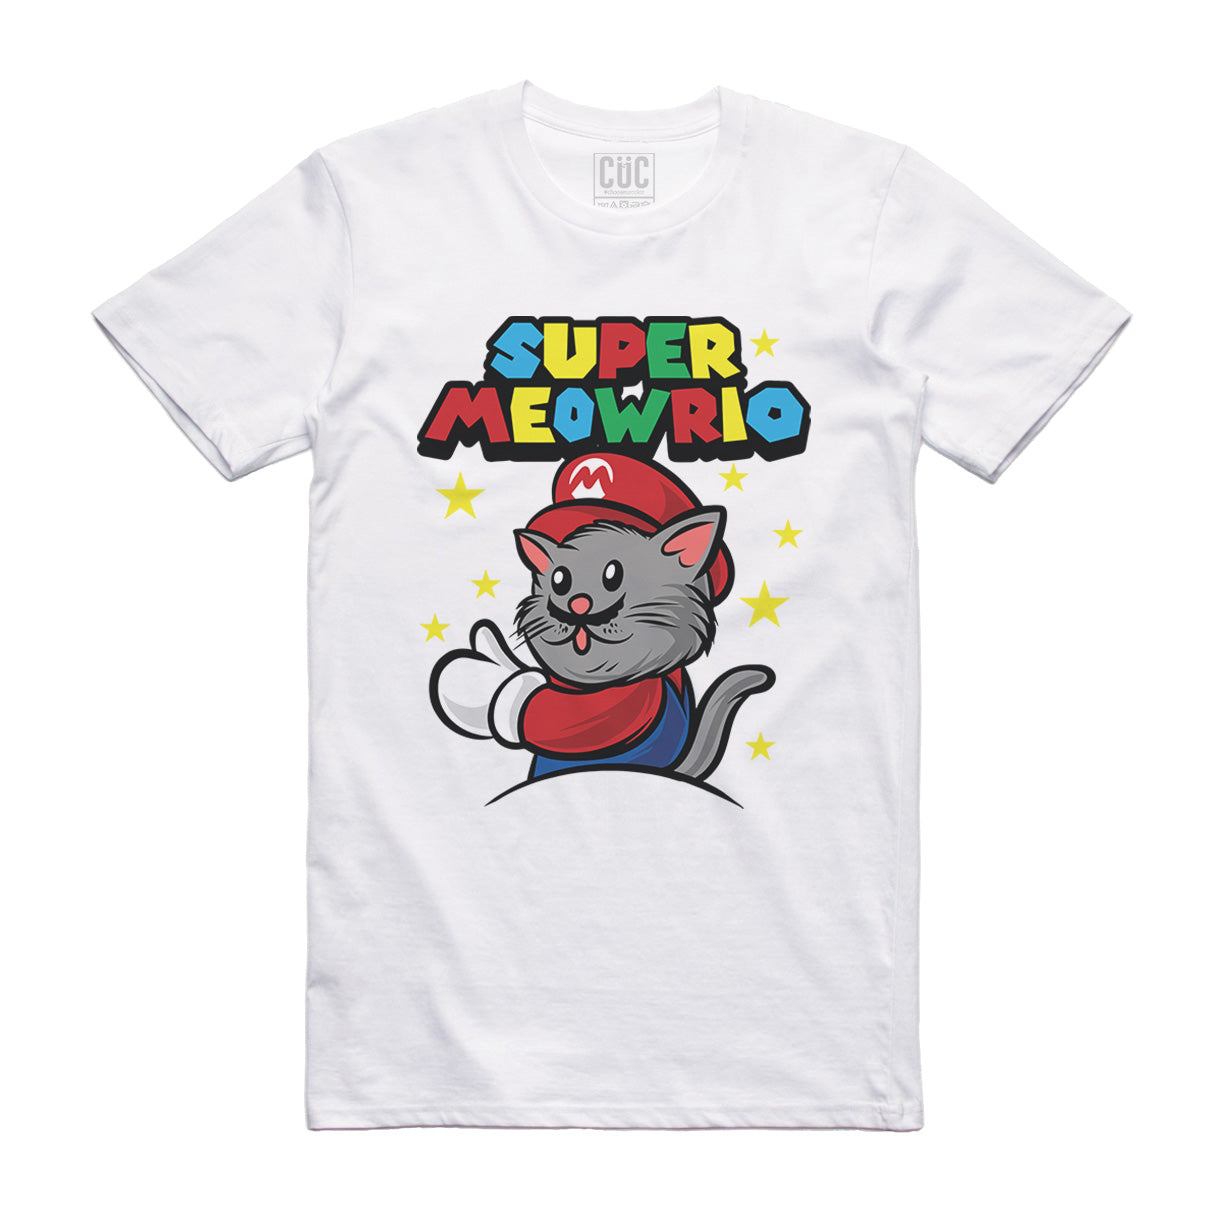 CUC T-Shirt Super Meowario- Cat lovers - #chooseurcolor - CUC chooseurcolor